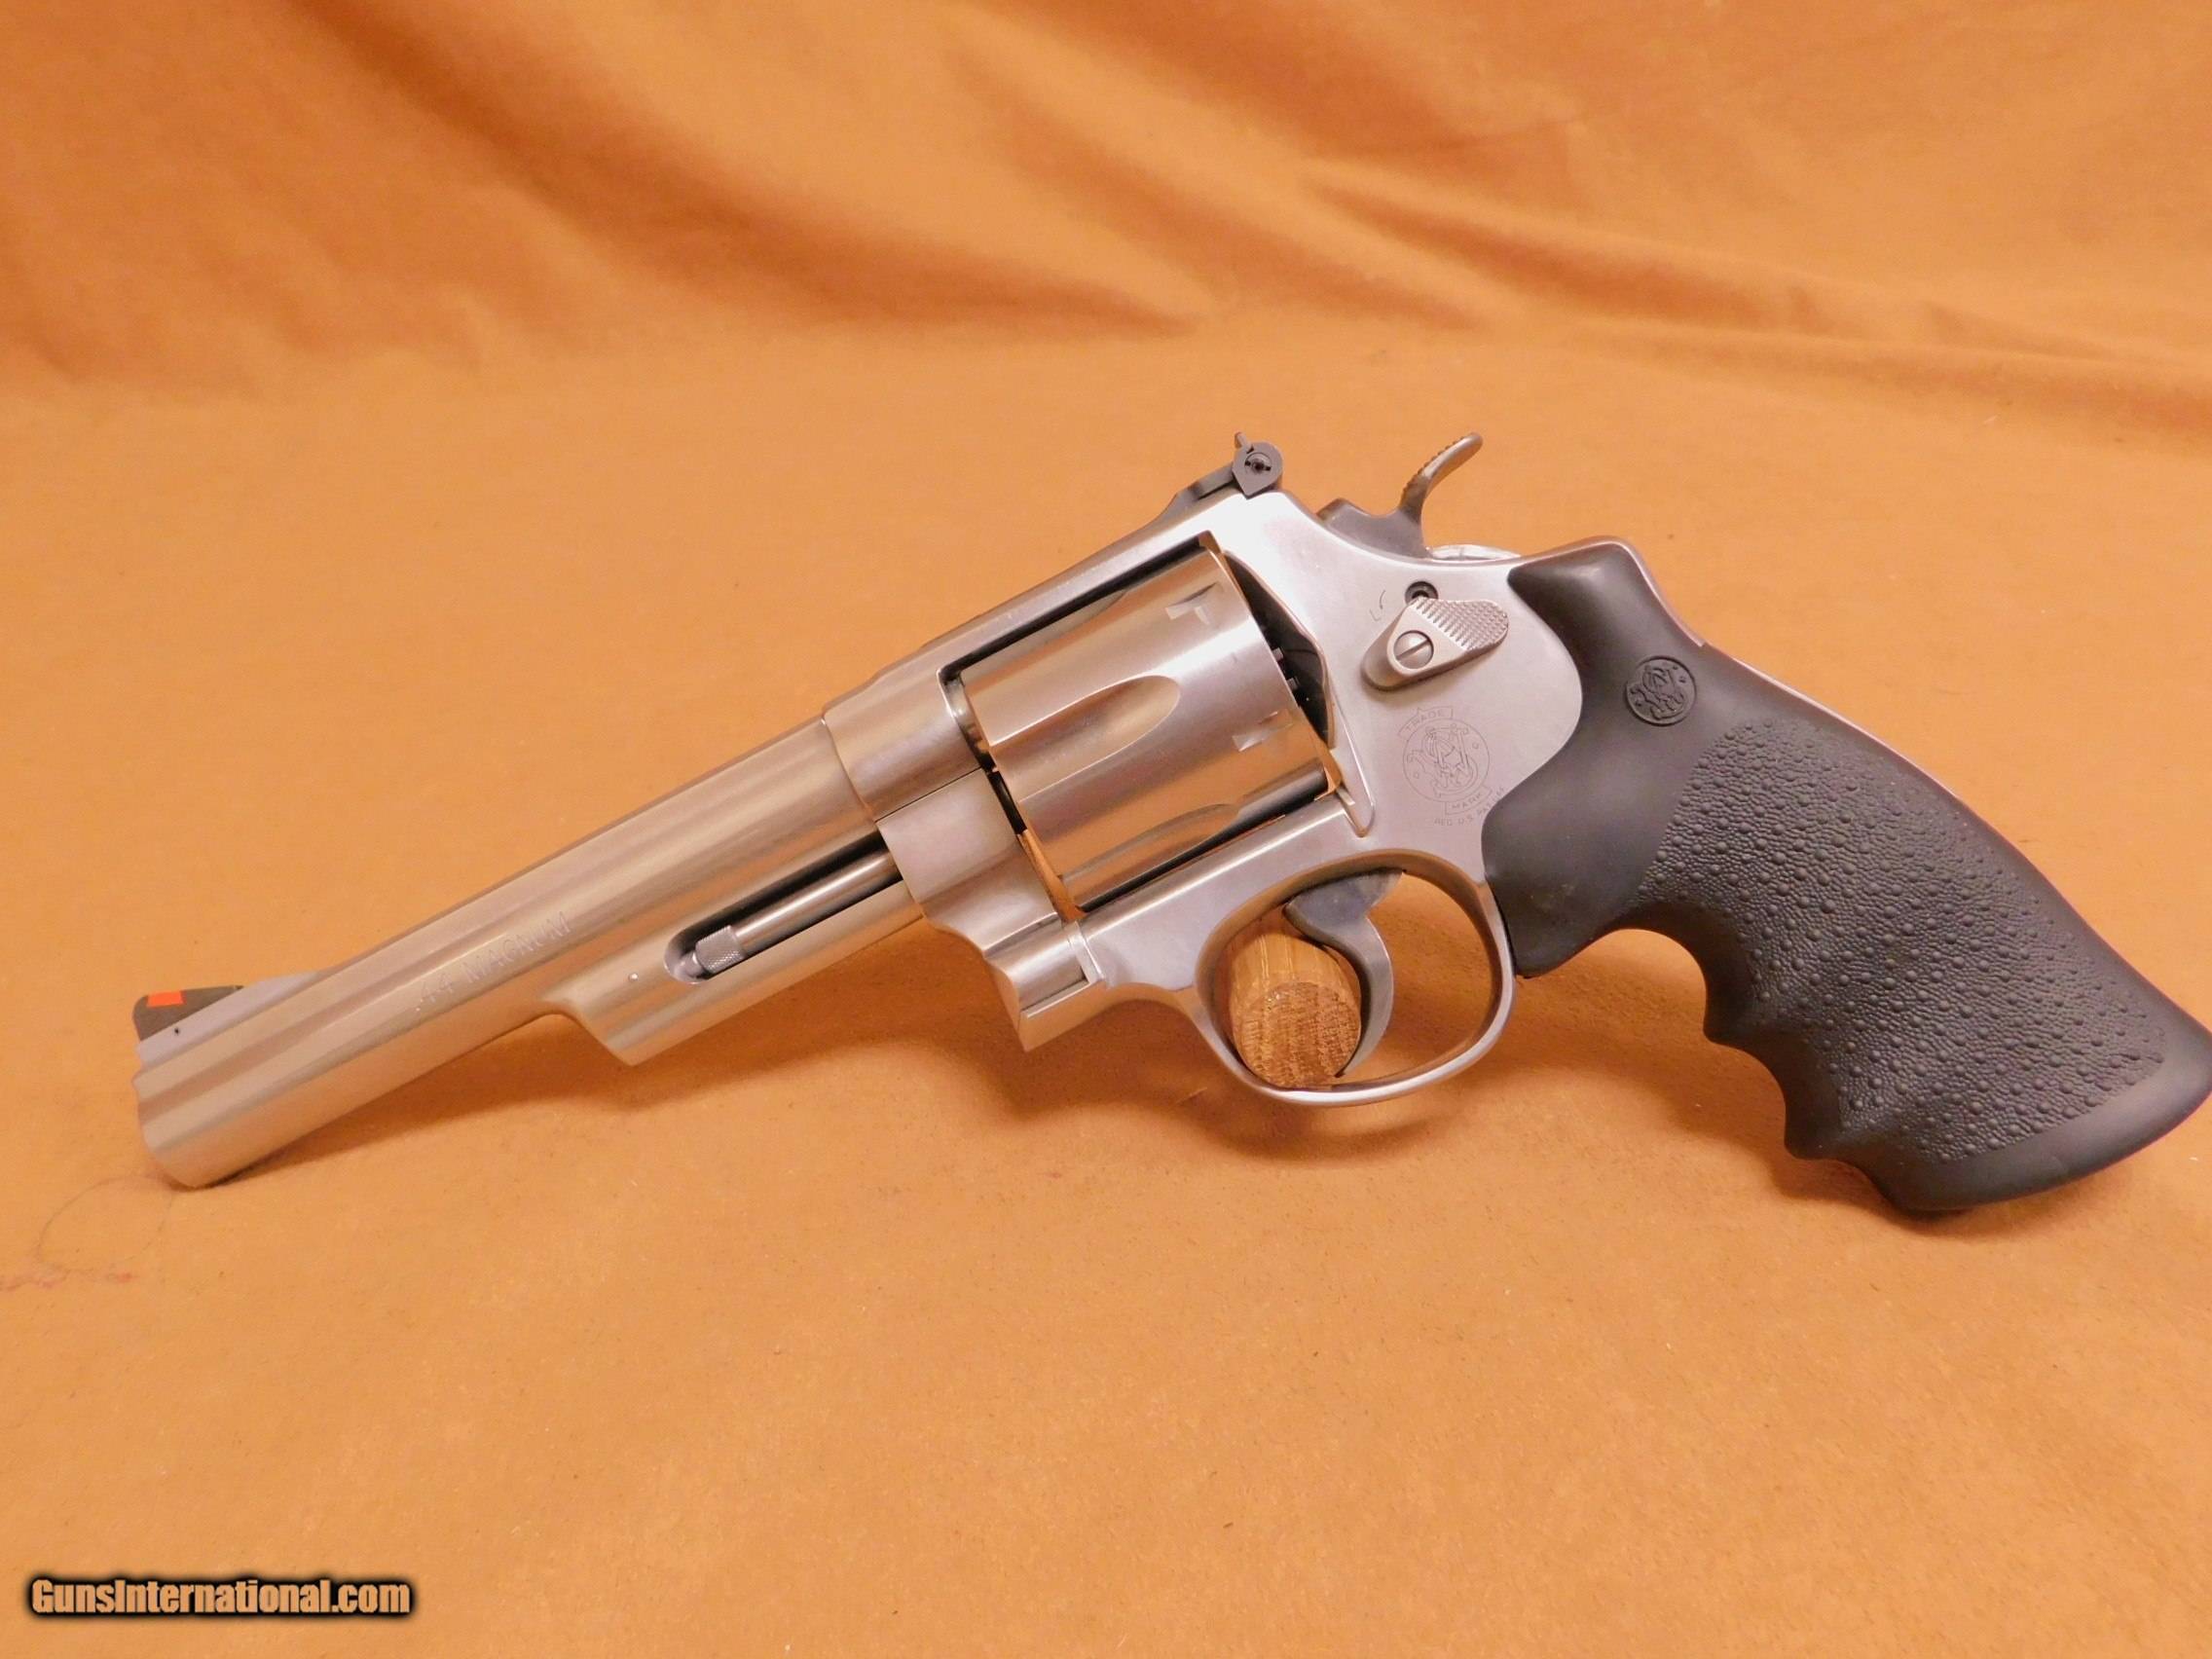 Smith & wesson model 29 magnum 44, описание и технические свойства пистолета